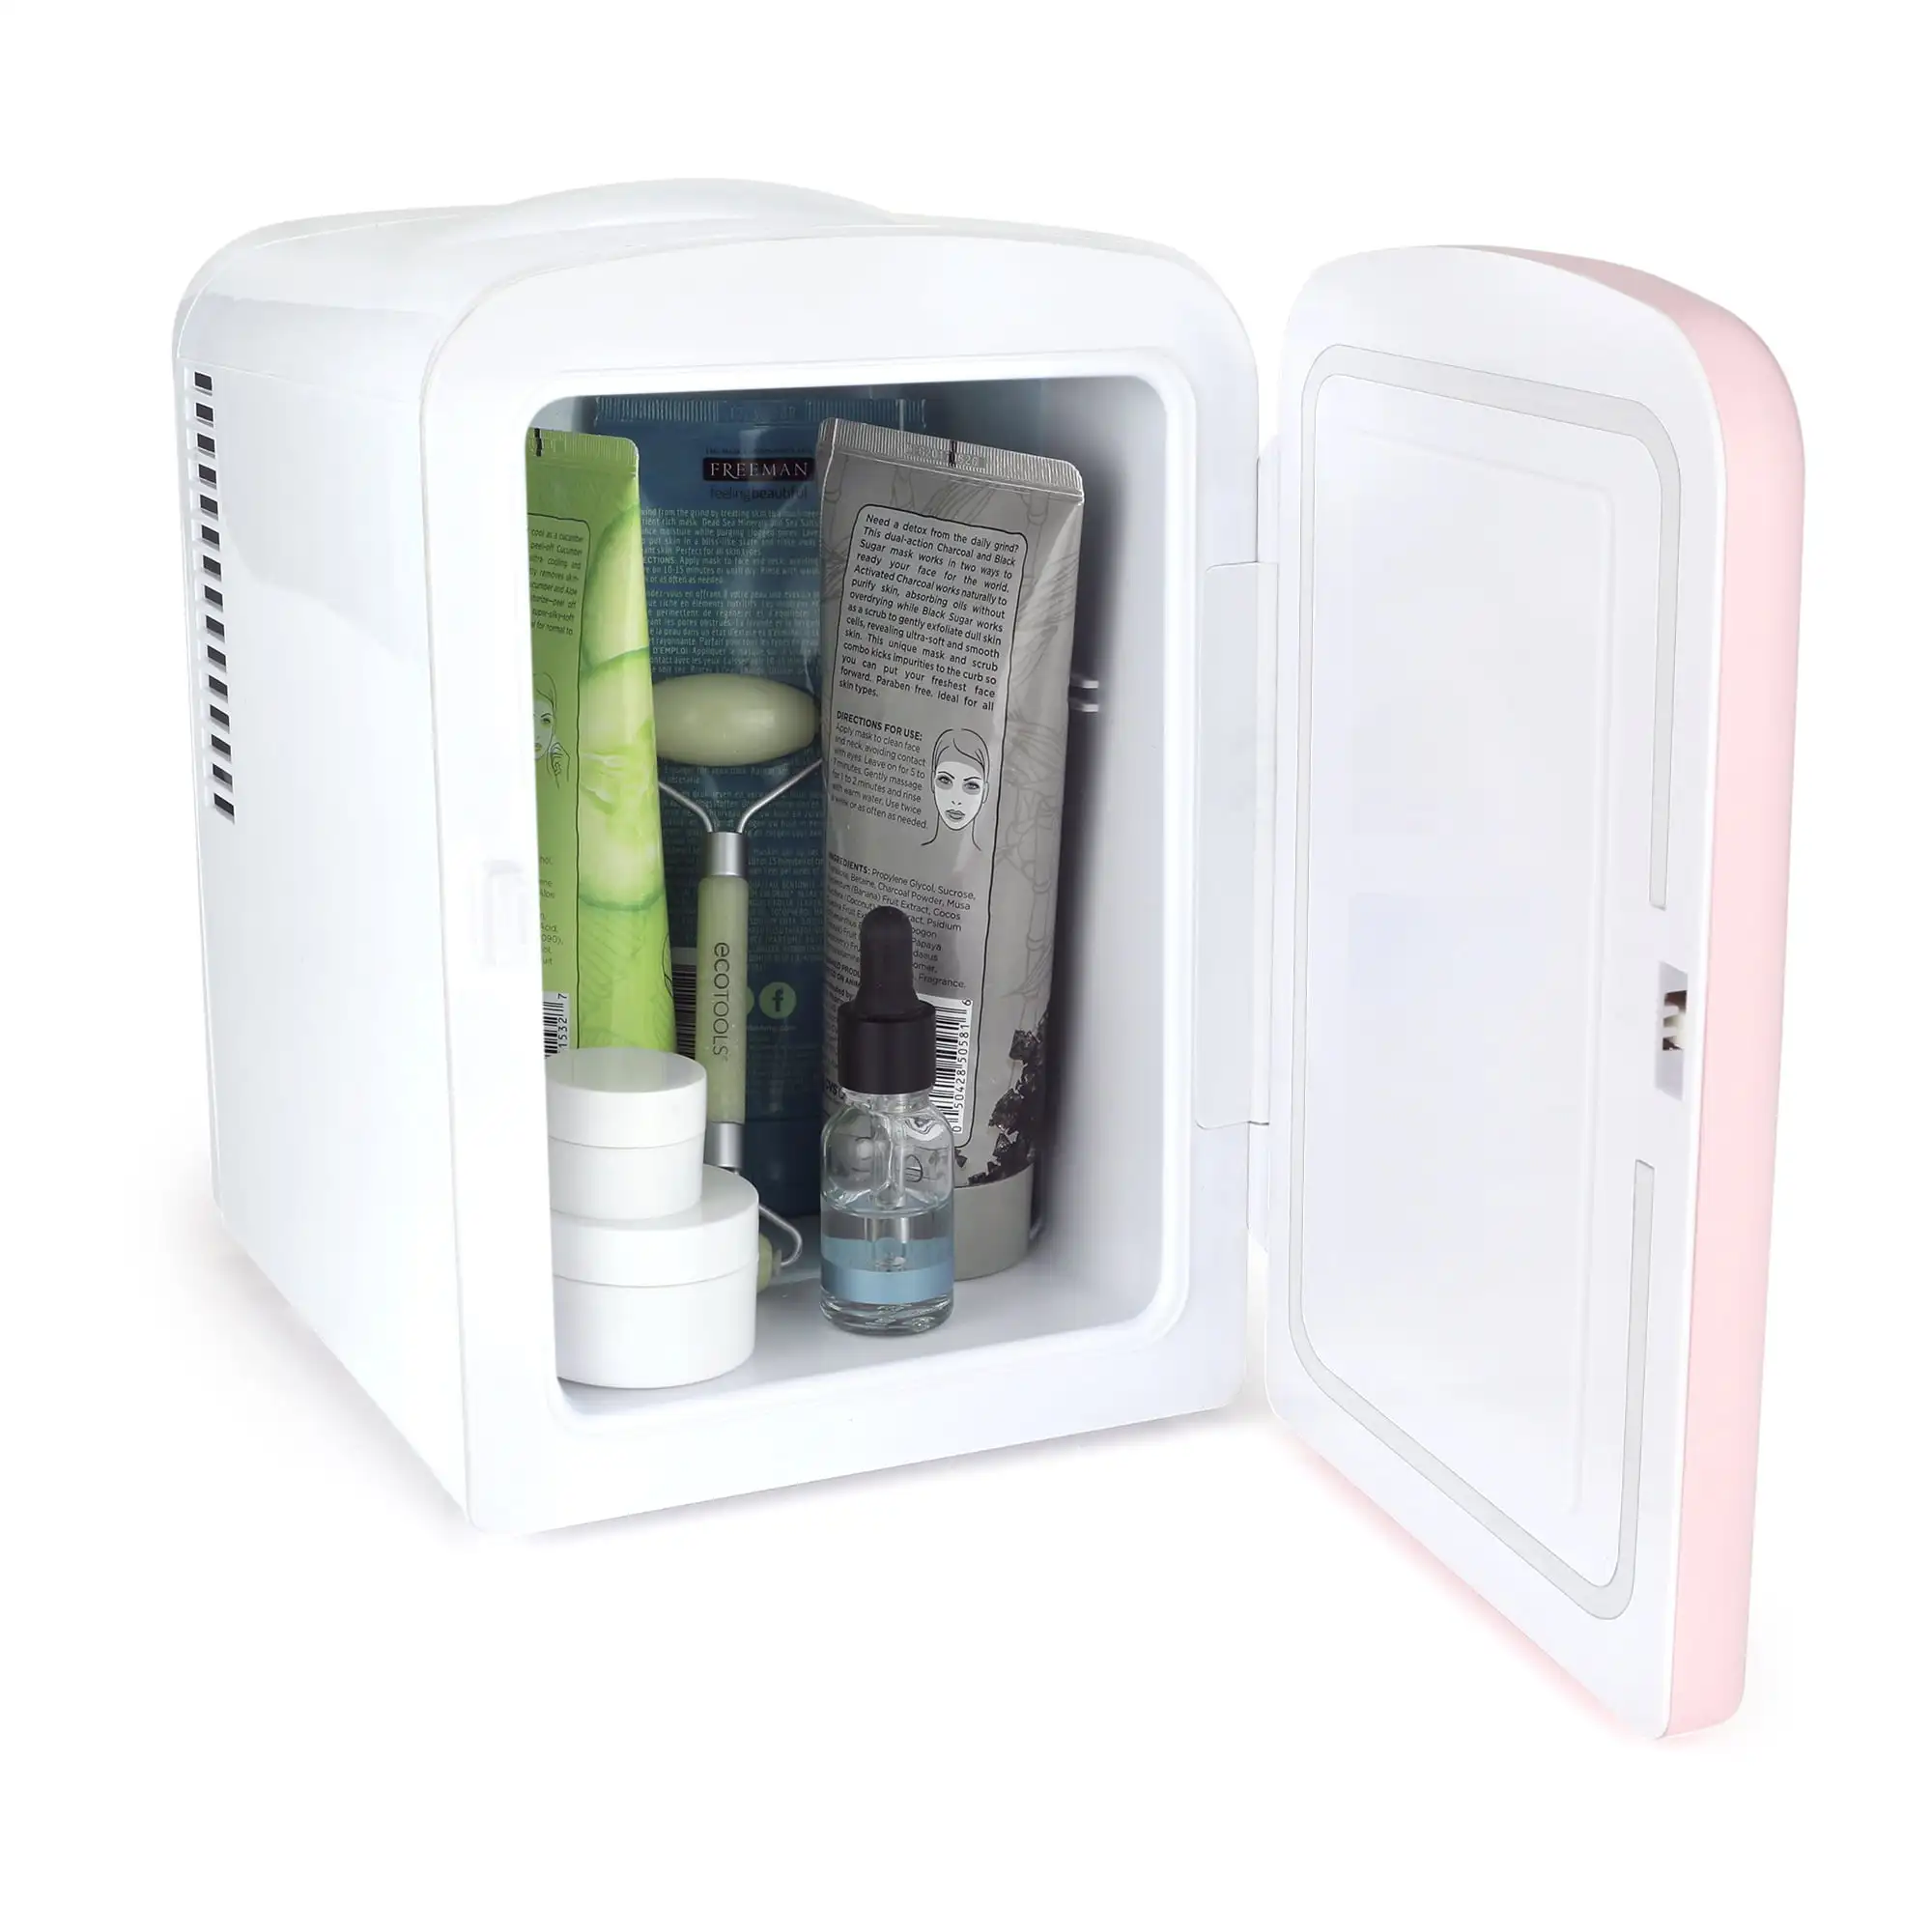 Mini Fridge Small Space Cooler Pink Portable Refrigerator Suitable for Car,  Outdoor refrigerador pequeño para cuarto